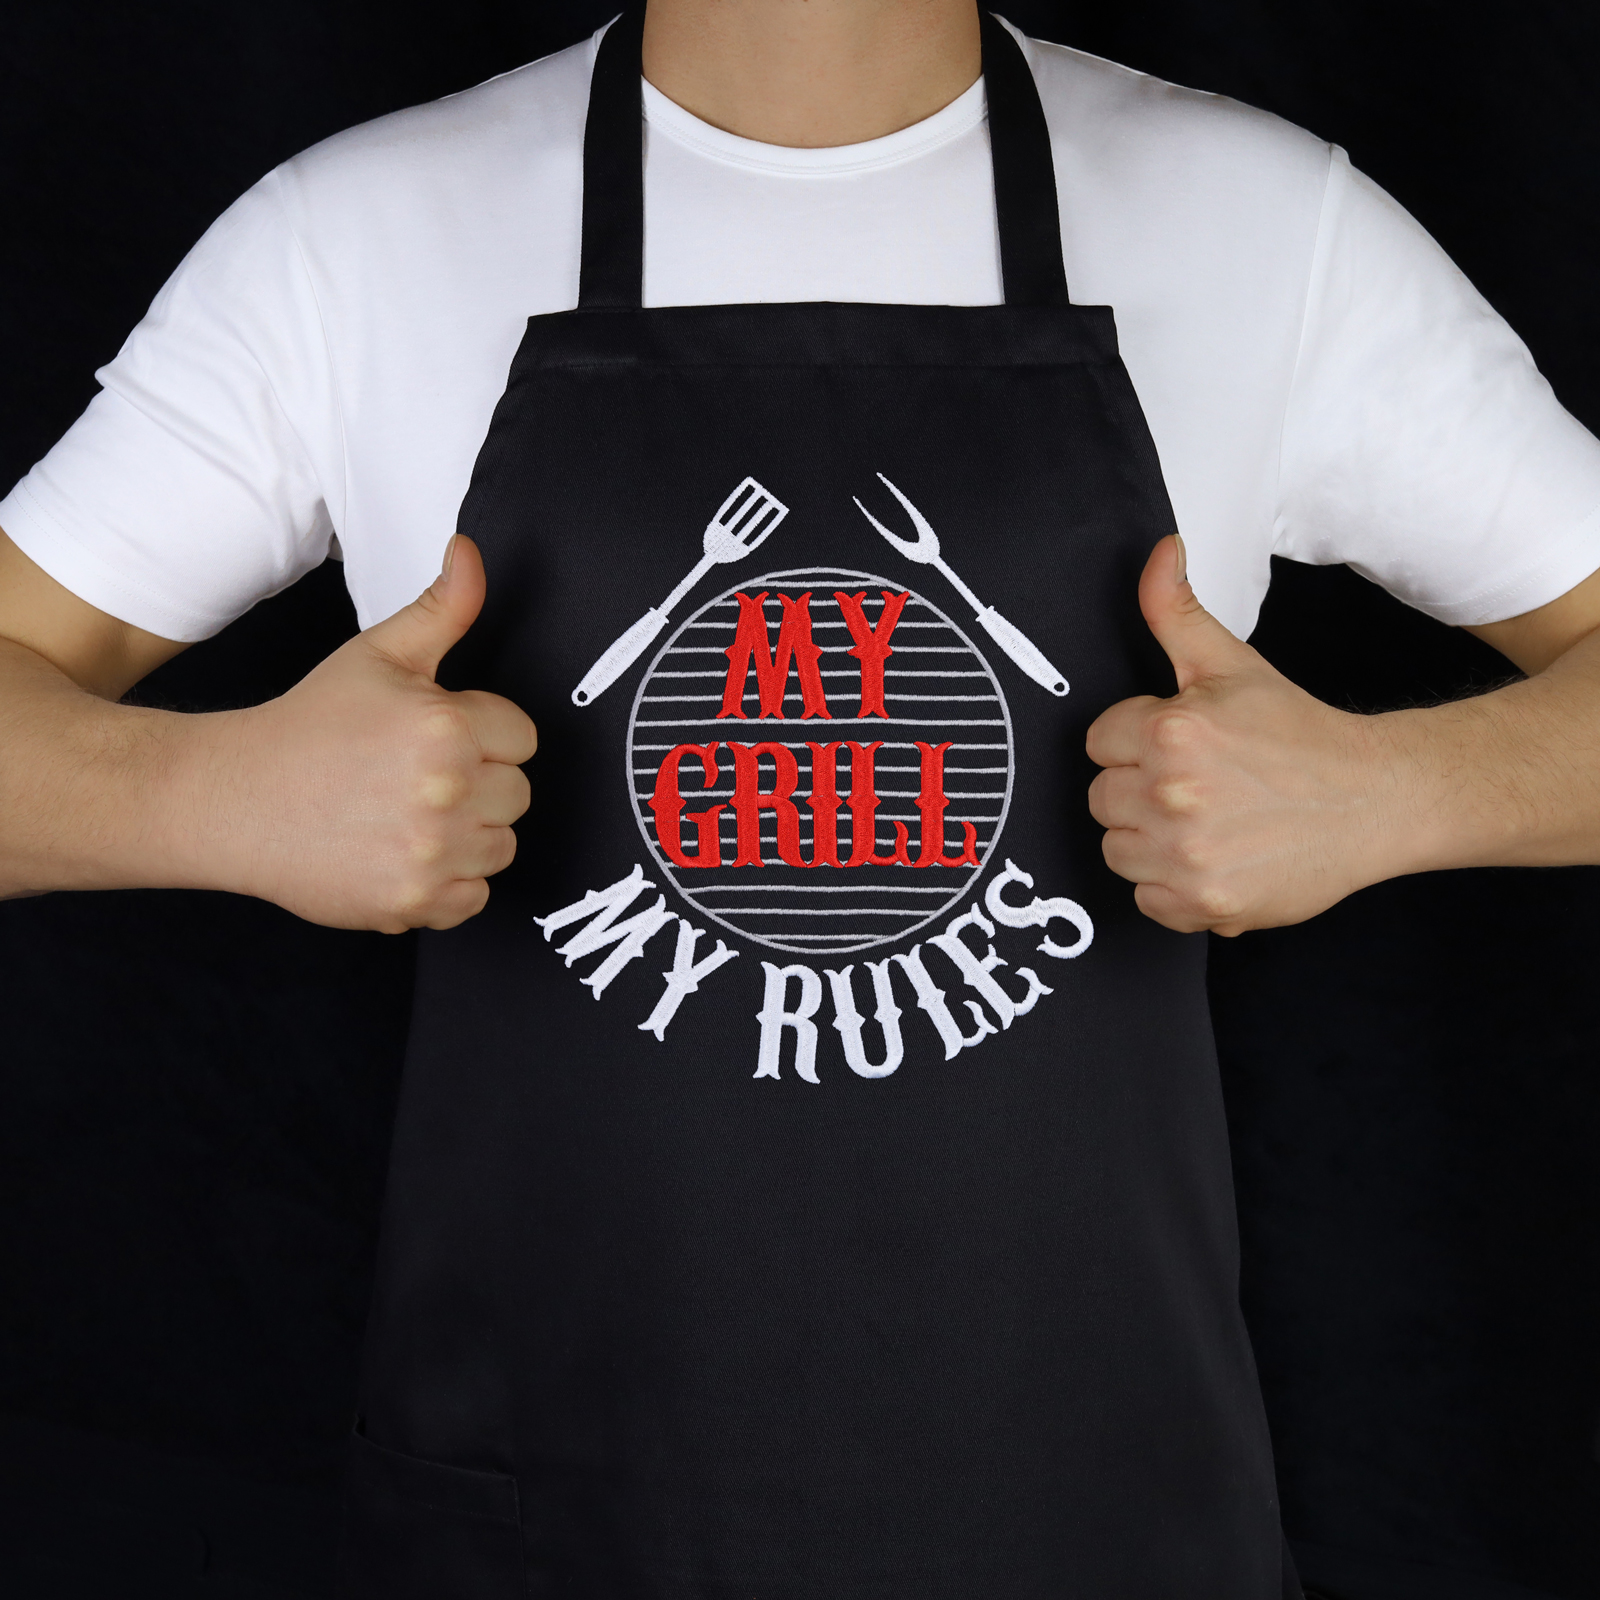 My grill - my rules - Grillschürze